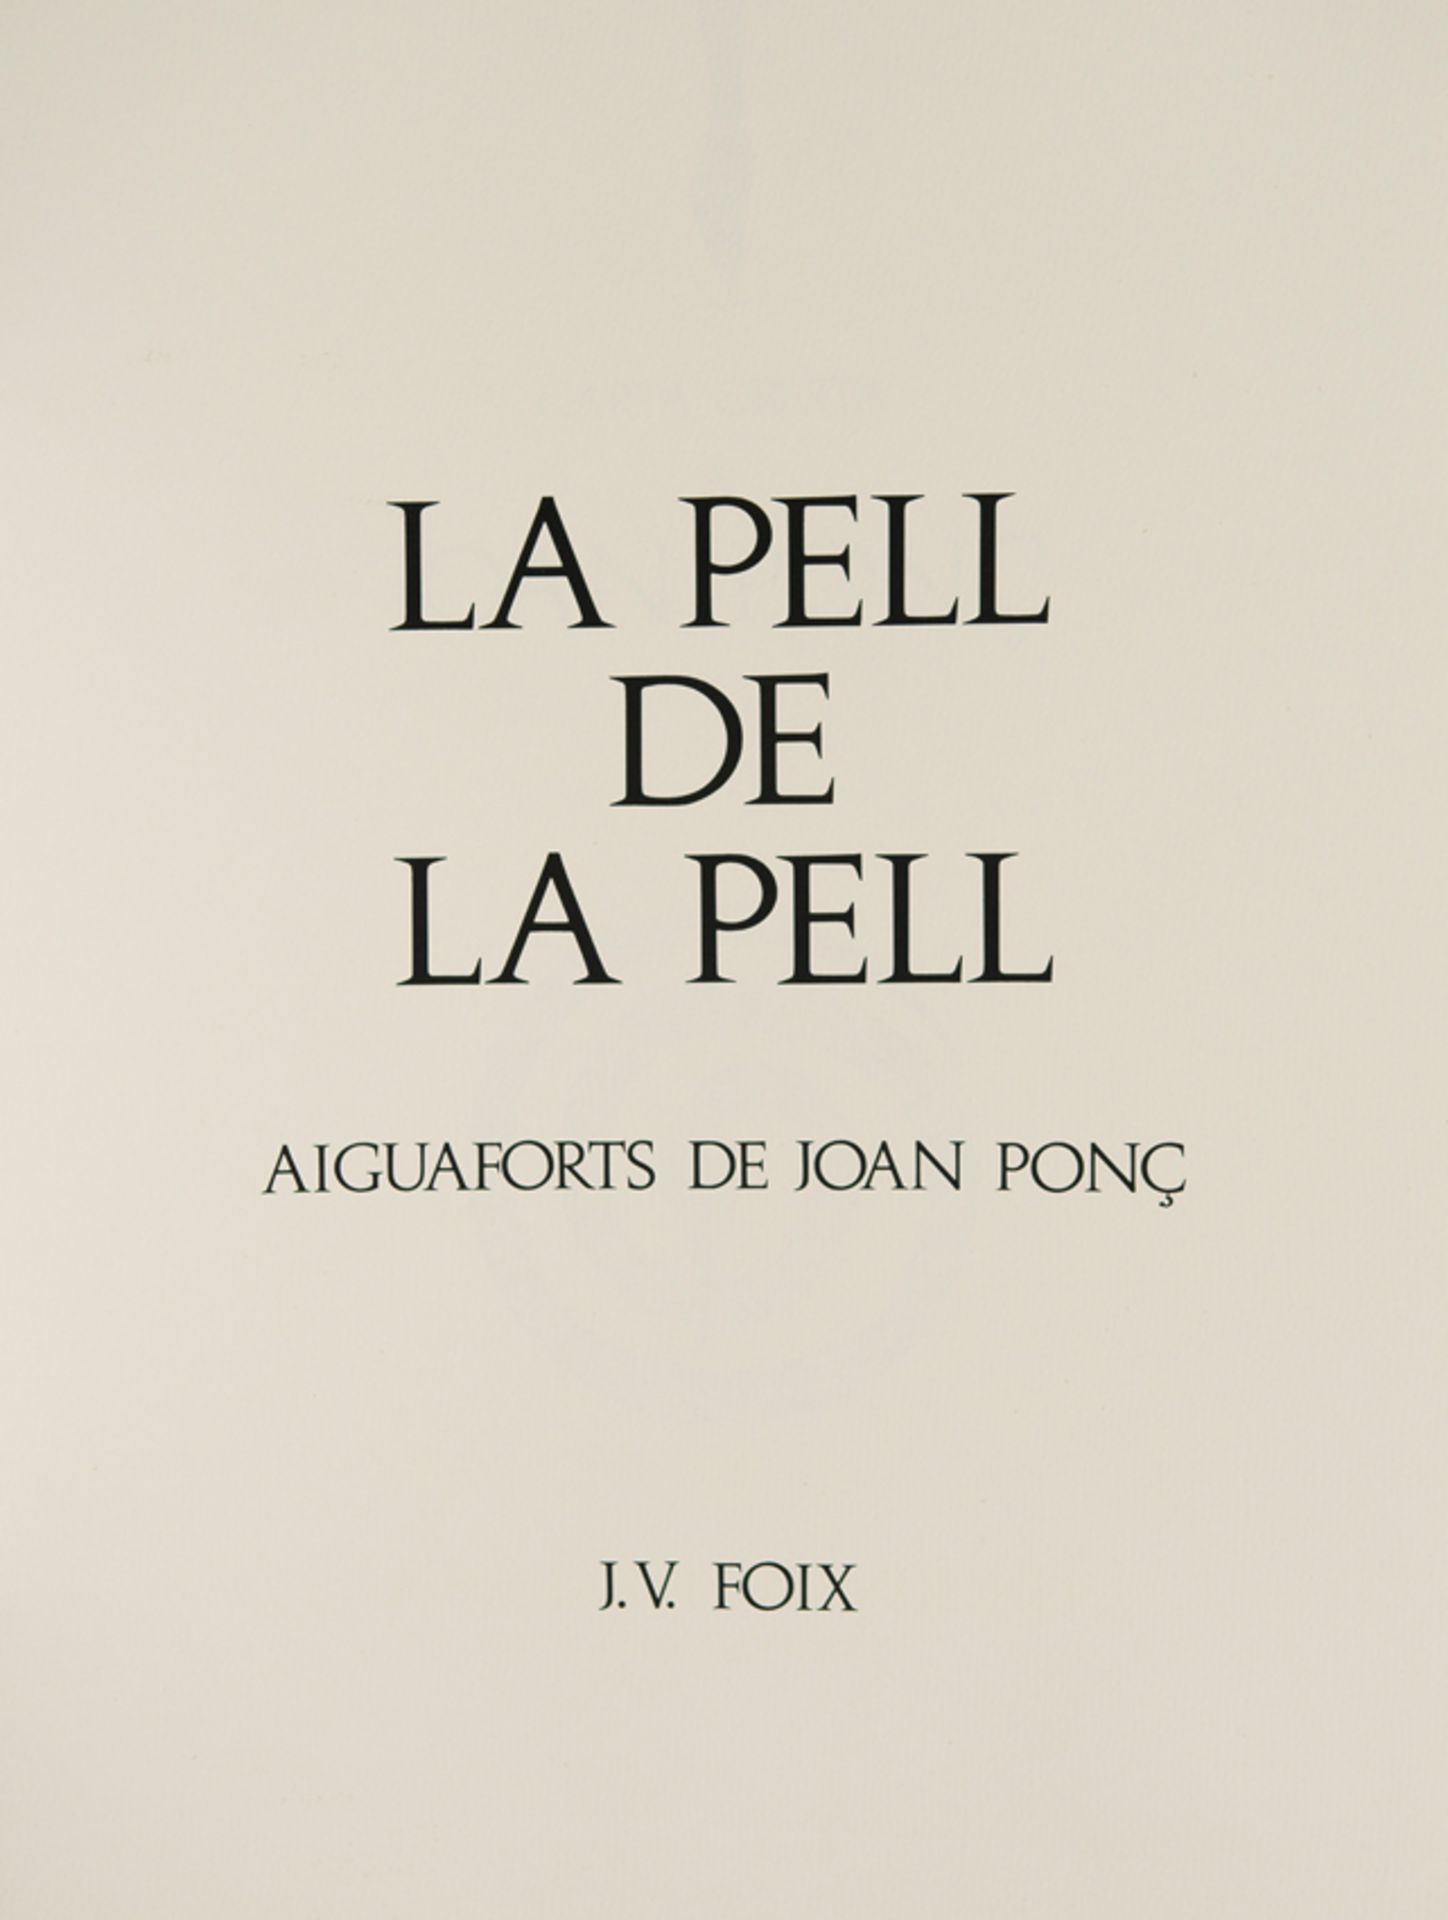 Joan Ponç (Barcelona, 1927 - Saint Paul de Vence, 1984) and Josep Vicent Foix (1893 - 1987) - Image 4 of 9